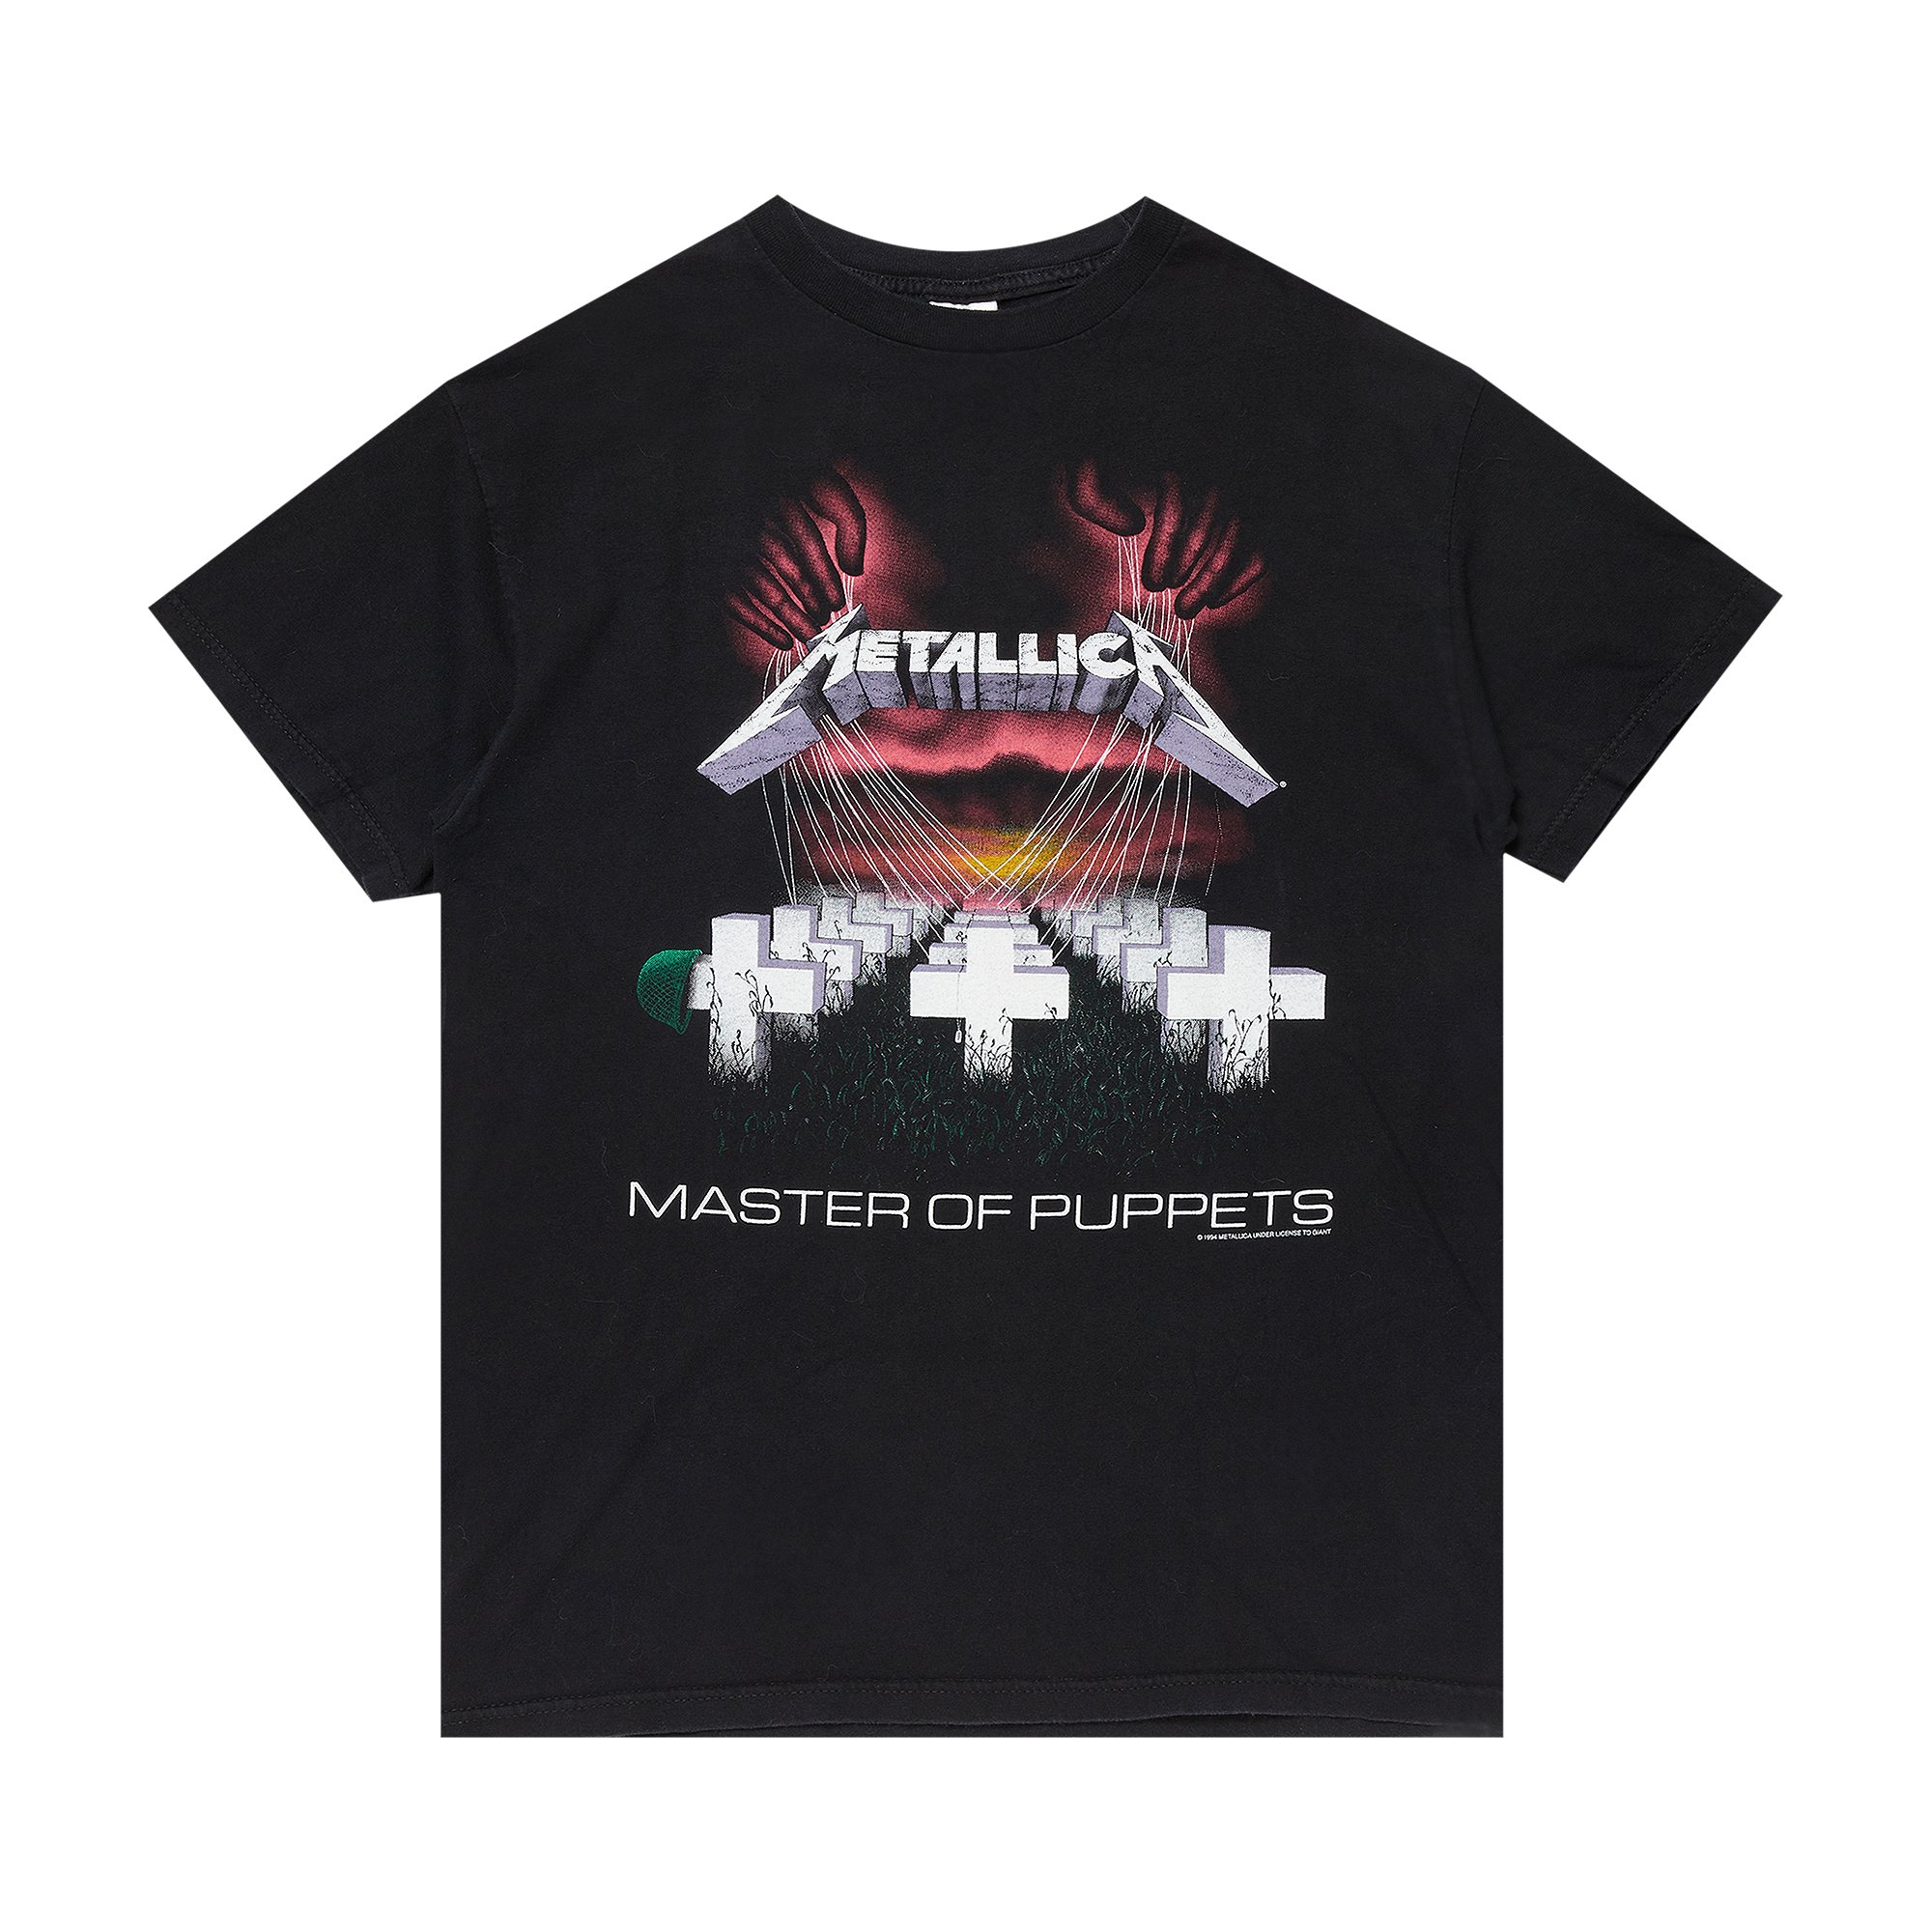 Винтажная футболка Metallica Mastermind Of Puppets, черная metallica metallica master of puppets